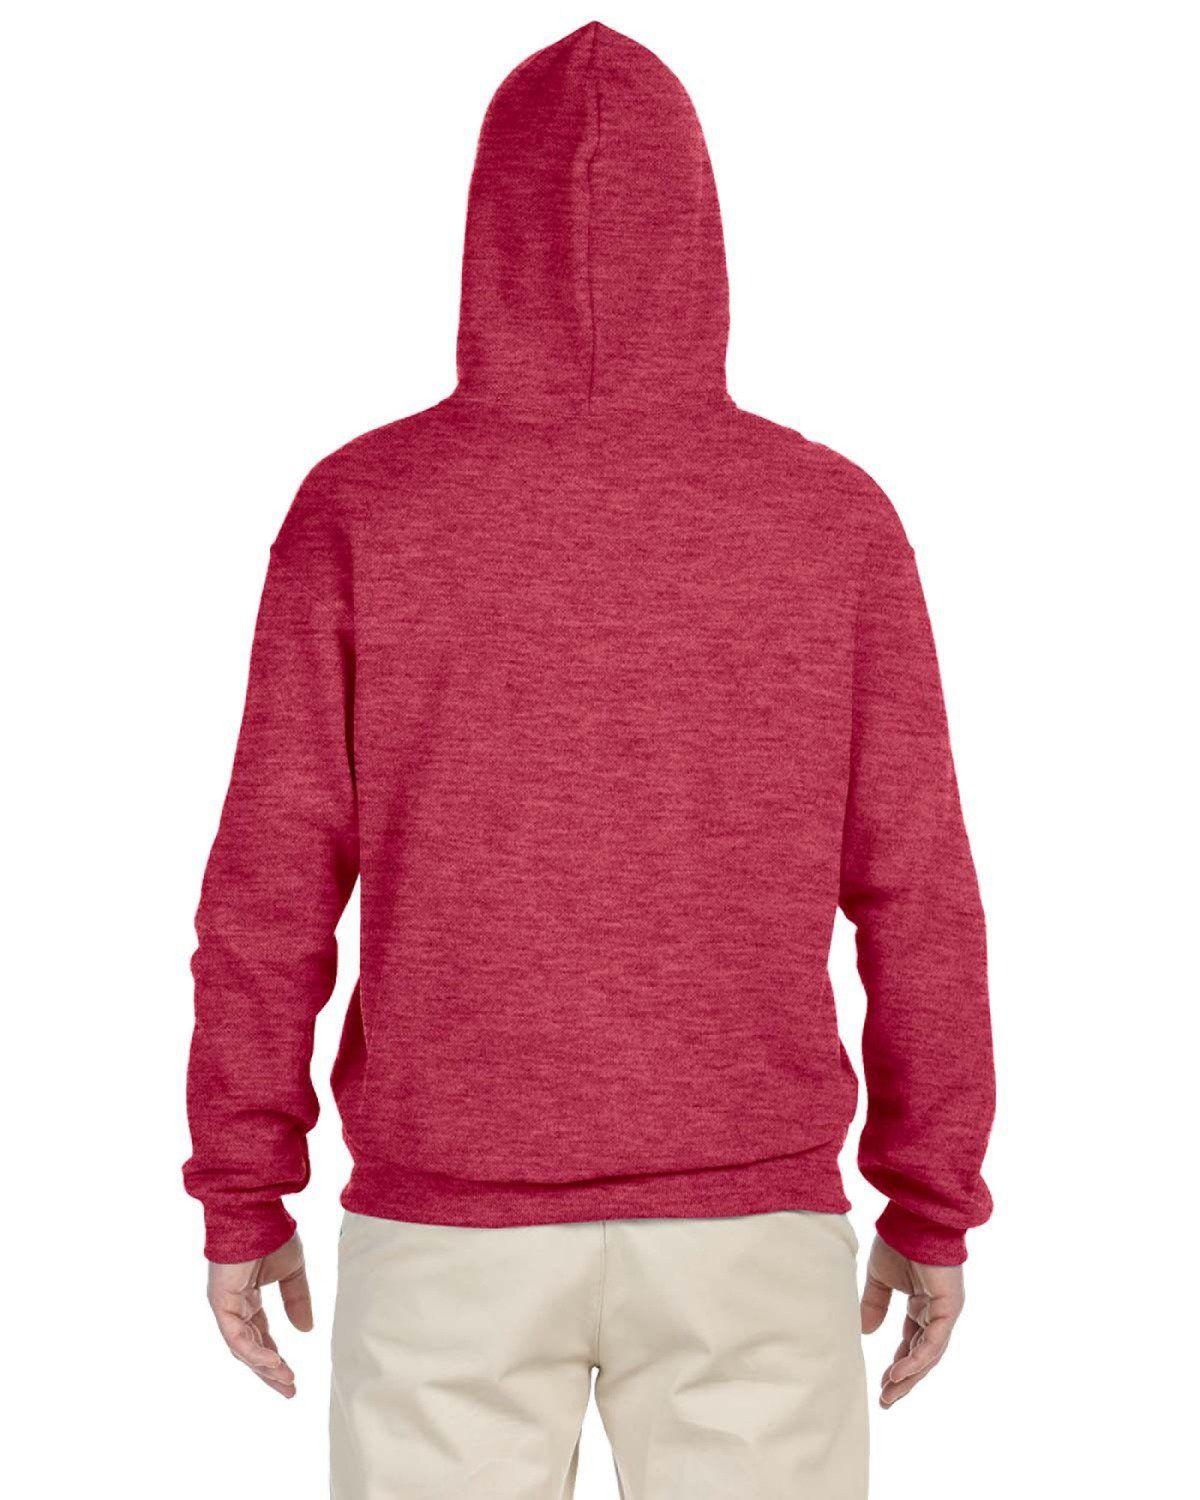 'Jerzees 996 Nublend Adult Pullover Hooded Sweatshirt'